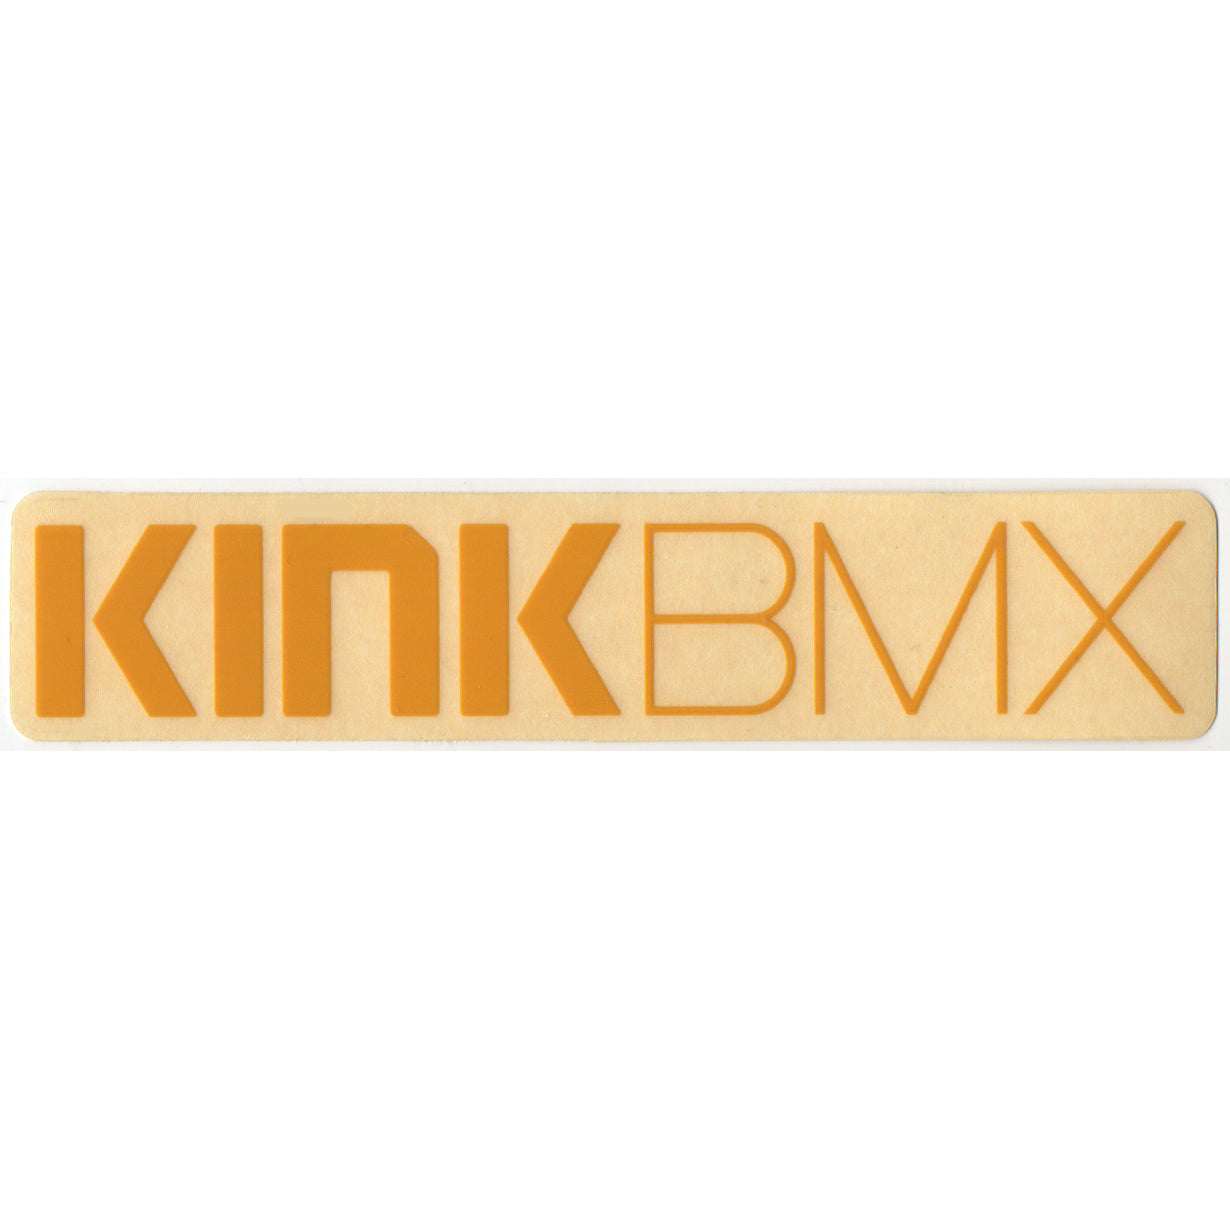 Kink BMX Sticker / Decal 10cm